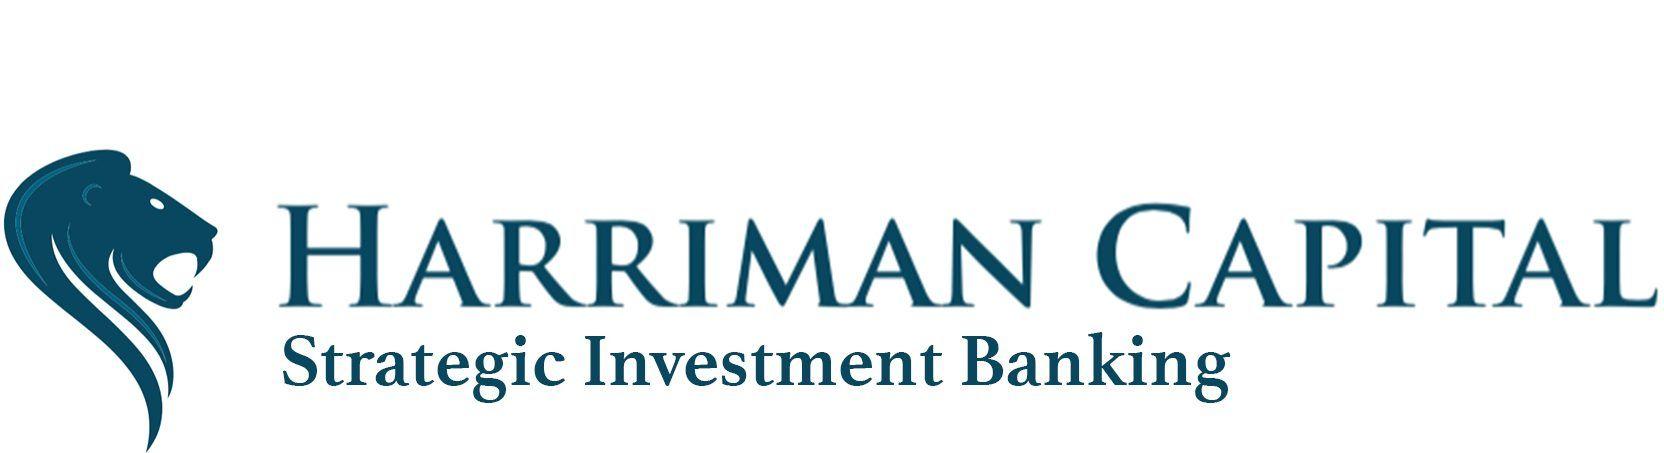 Investment Banking Logo - Harriman Capital. Strategic Investment Banking